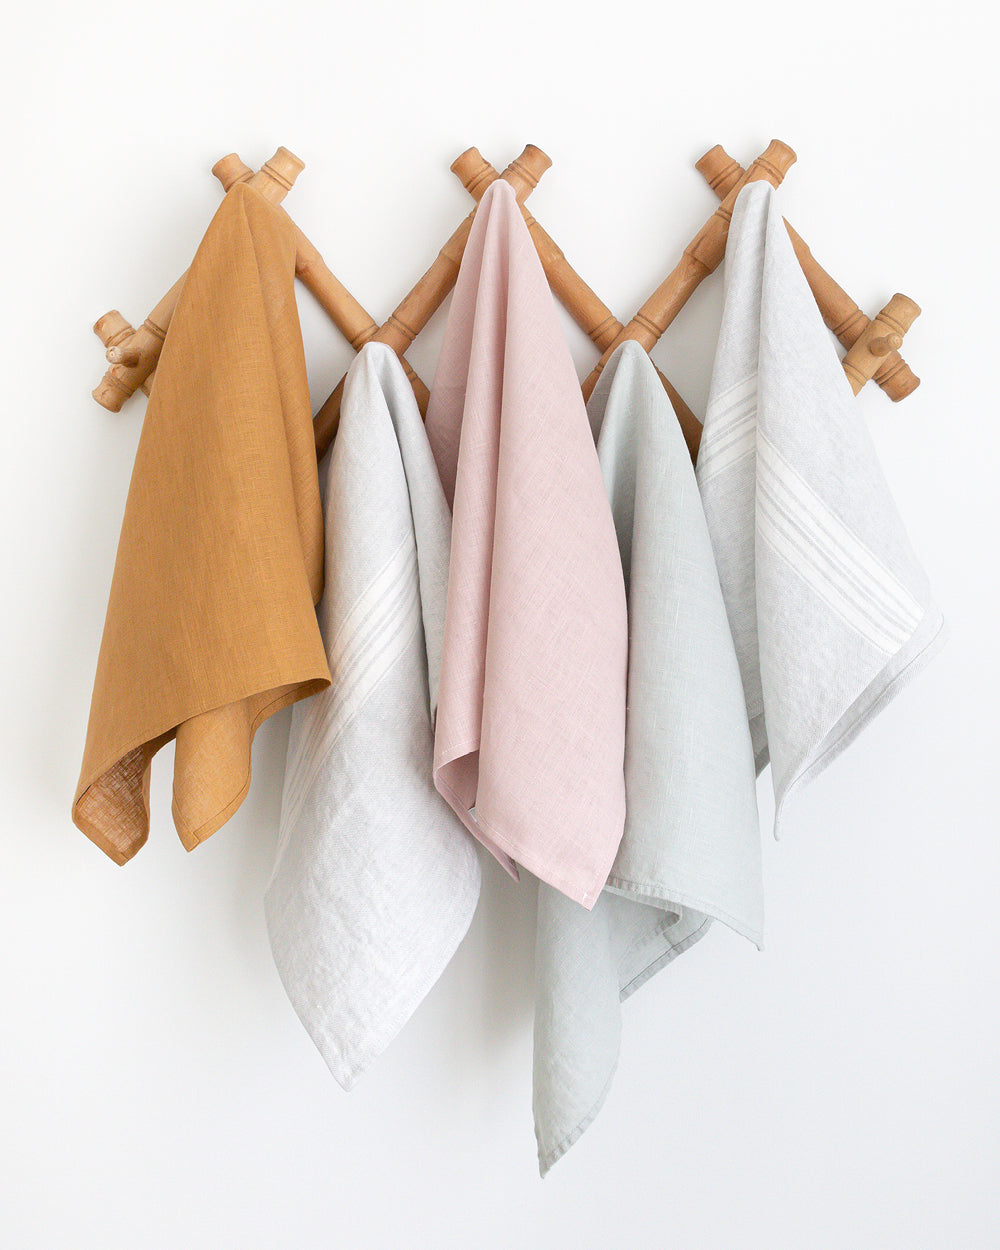 Collection of linen tea towel on wall rack.